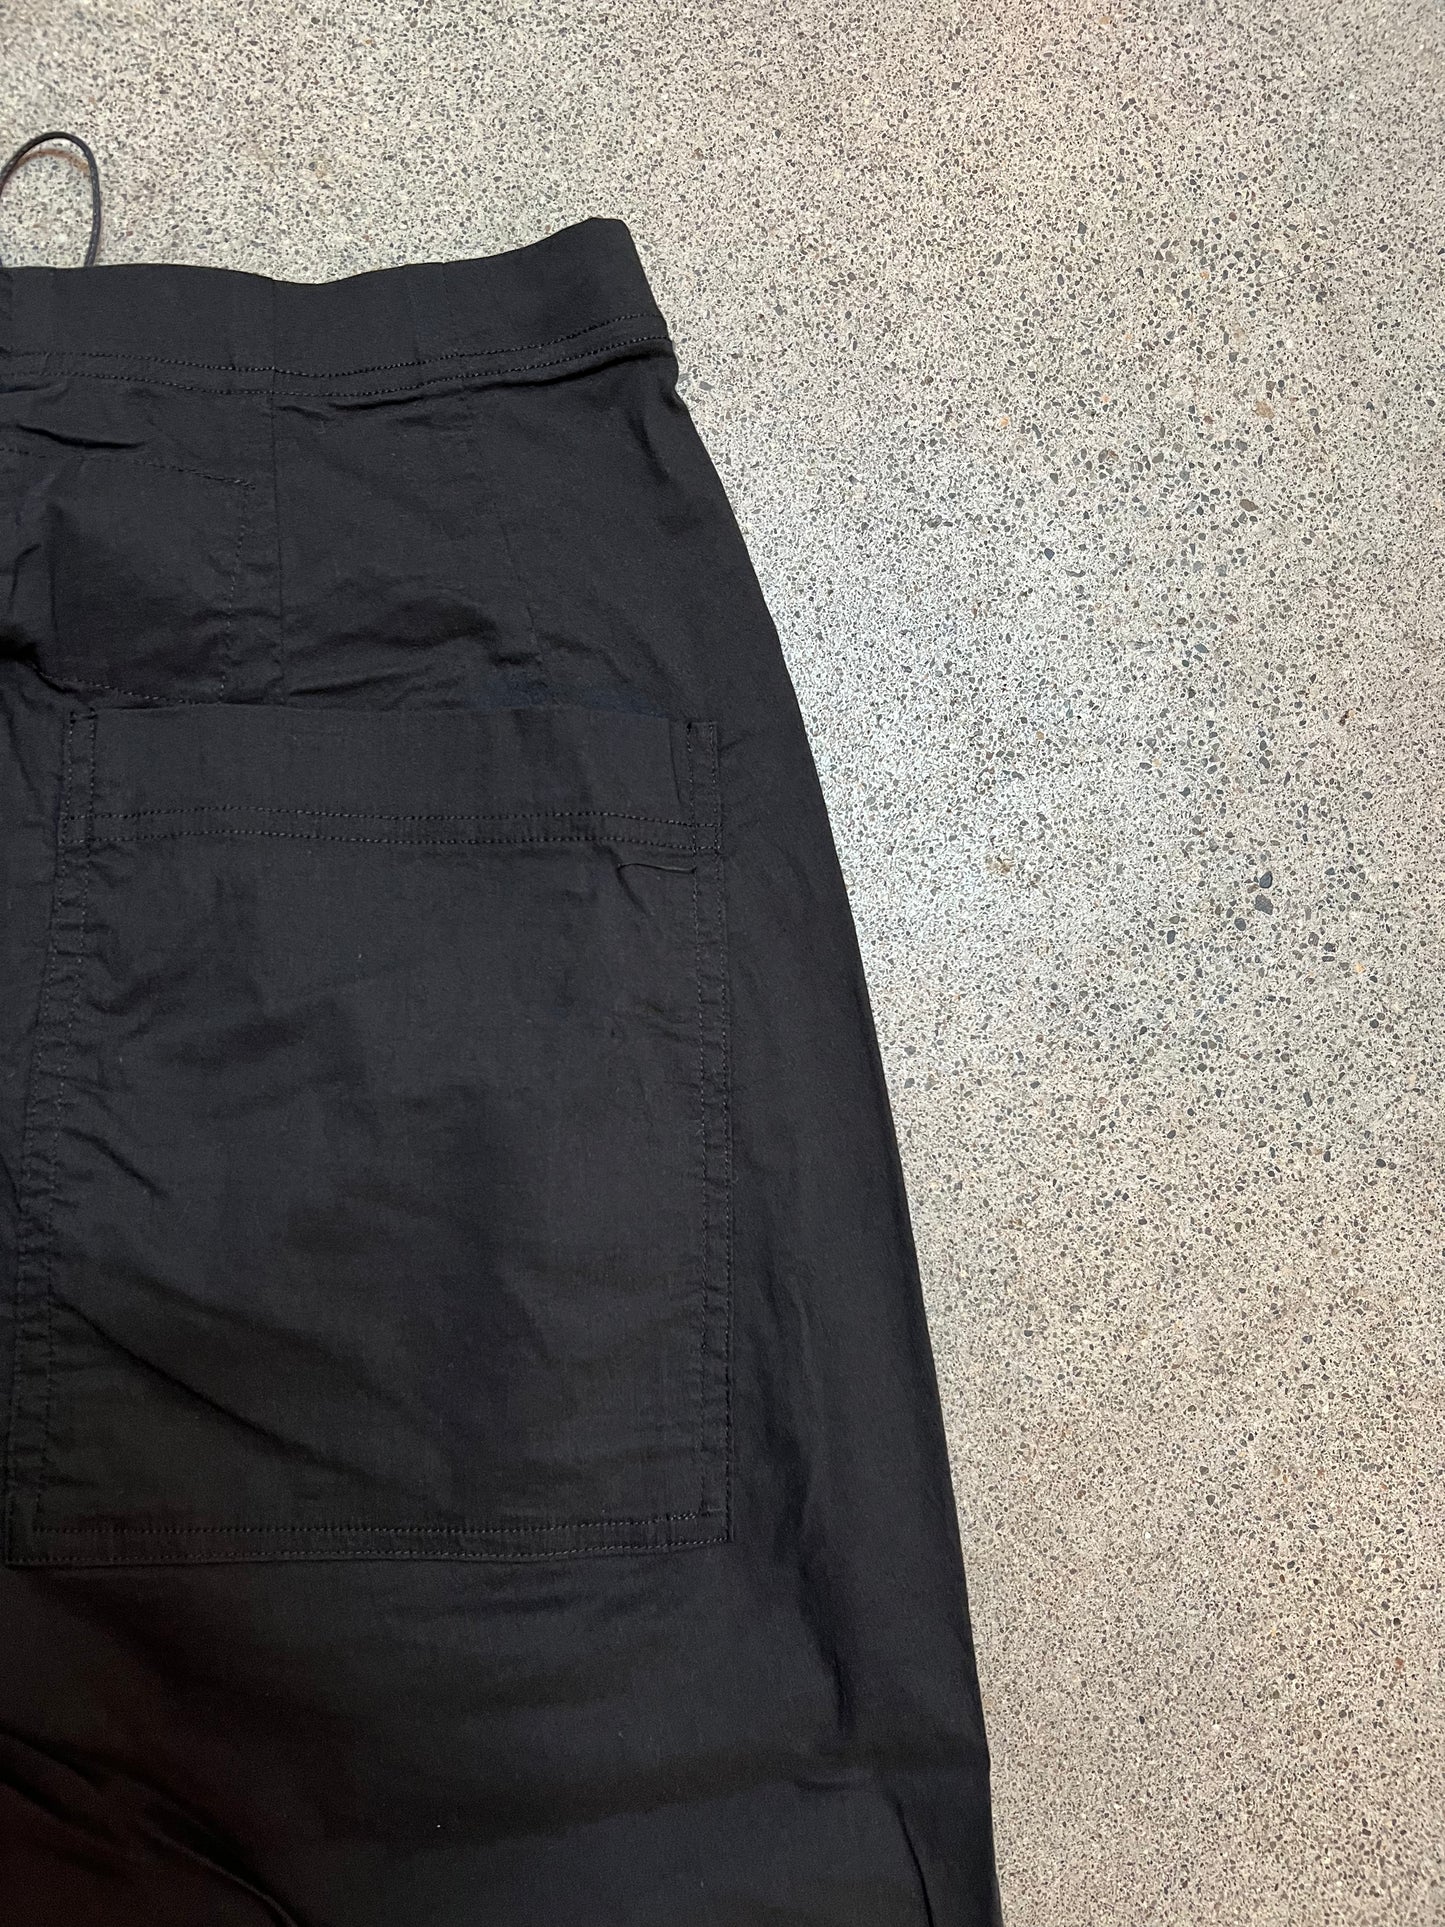 Rundholz Black Label - Crop Pull-on Pants in Black or Lime